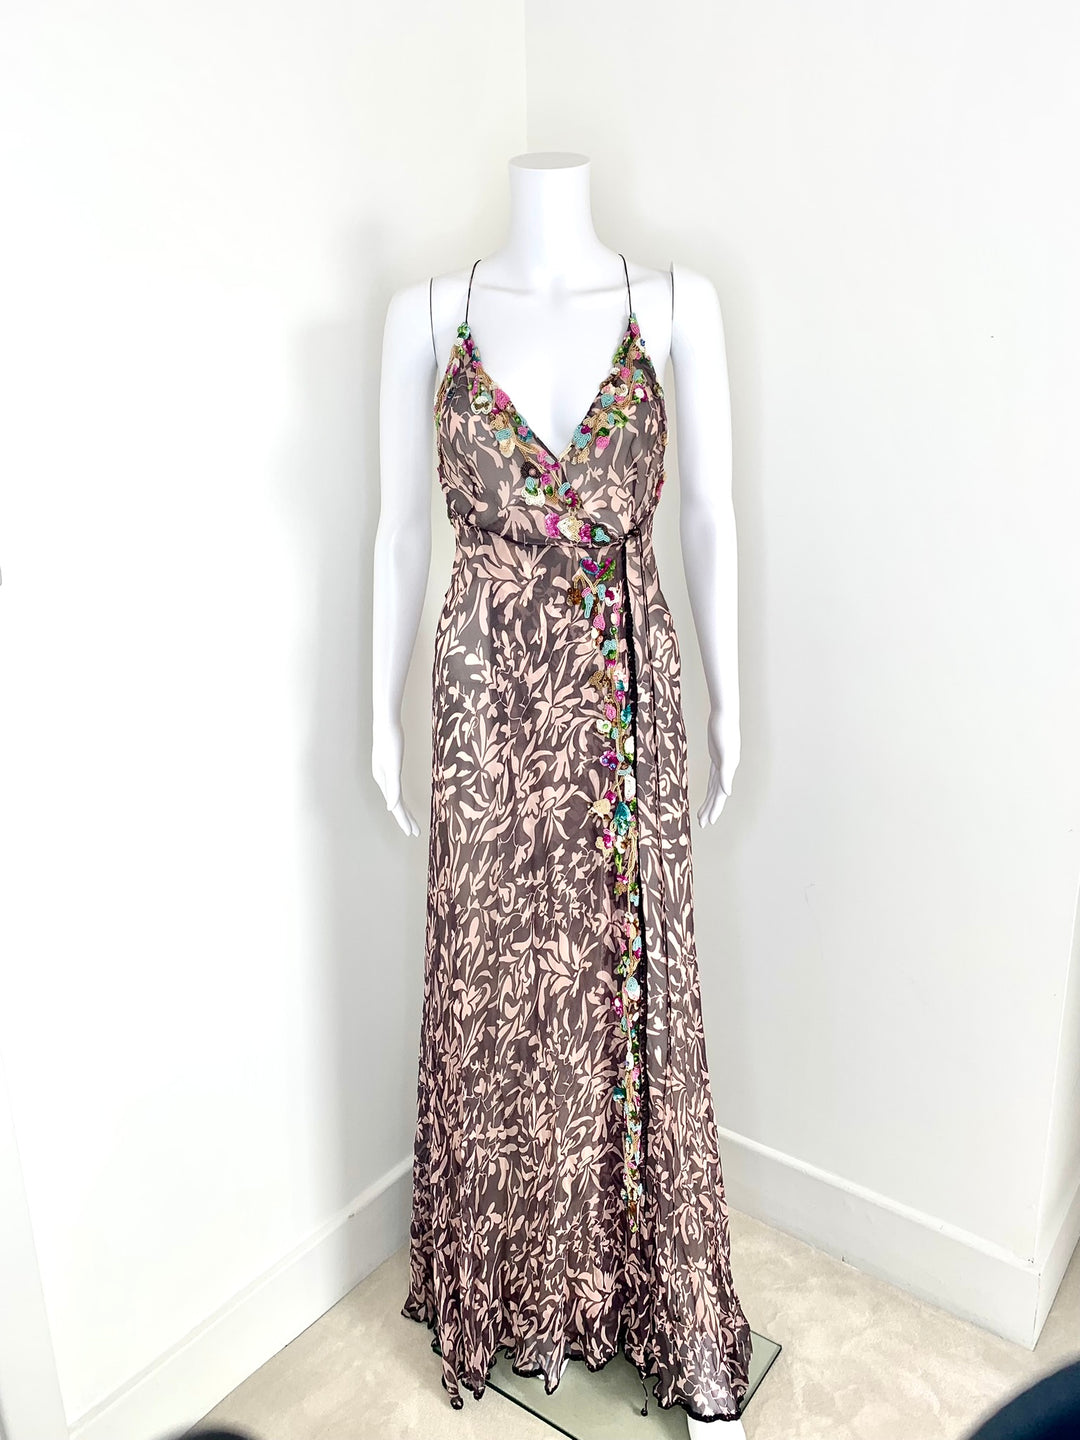 Missoni, Dress, 2005, Size UK 8